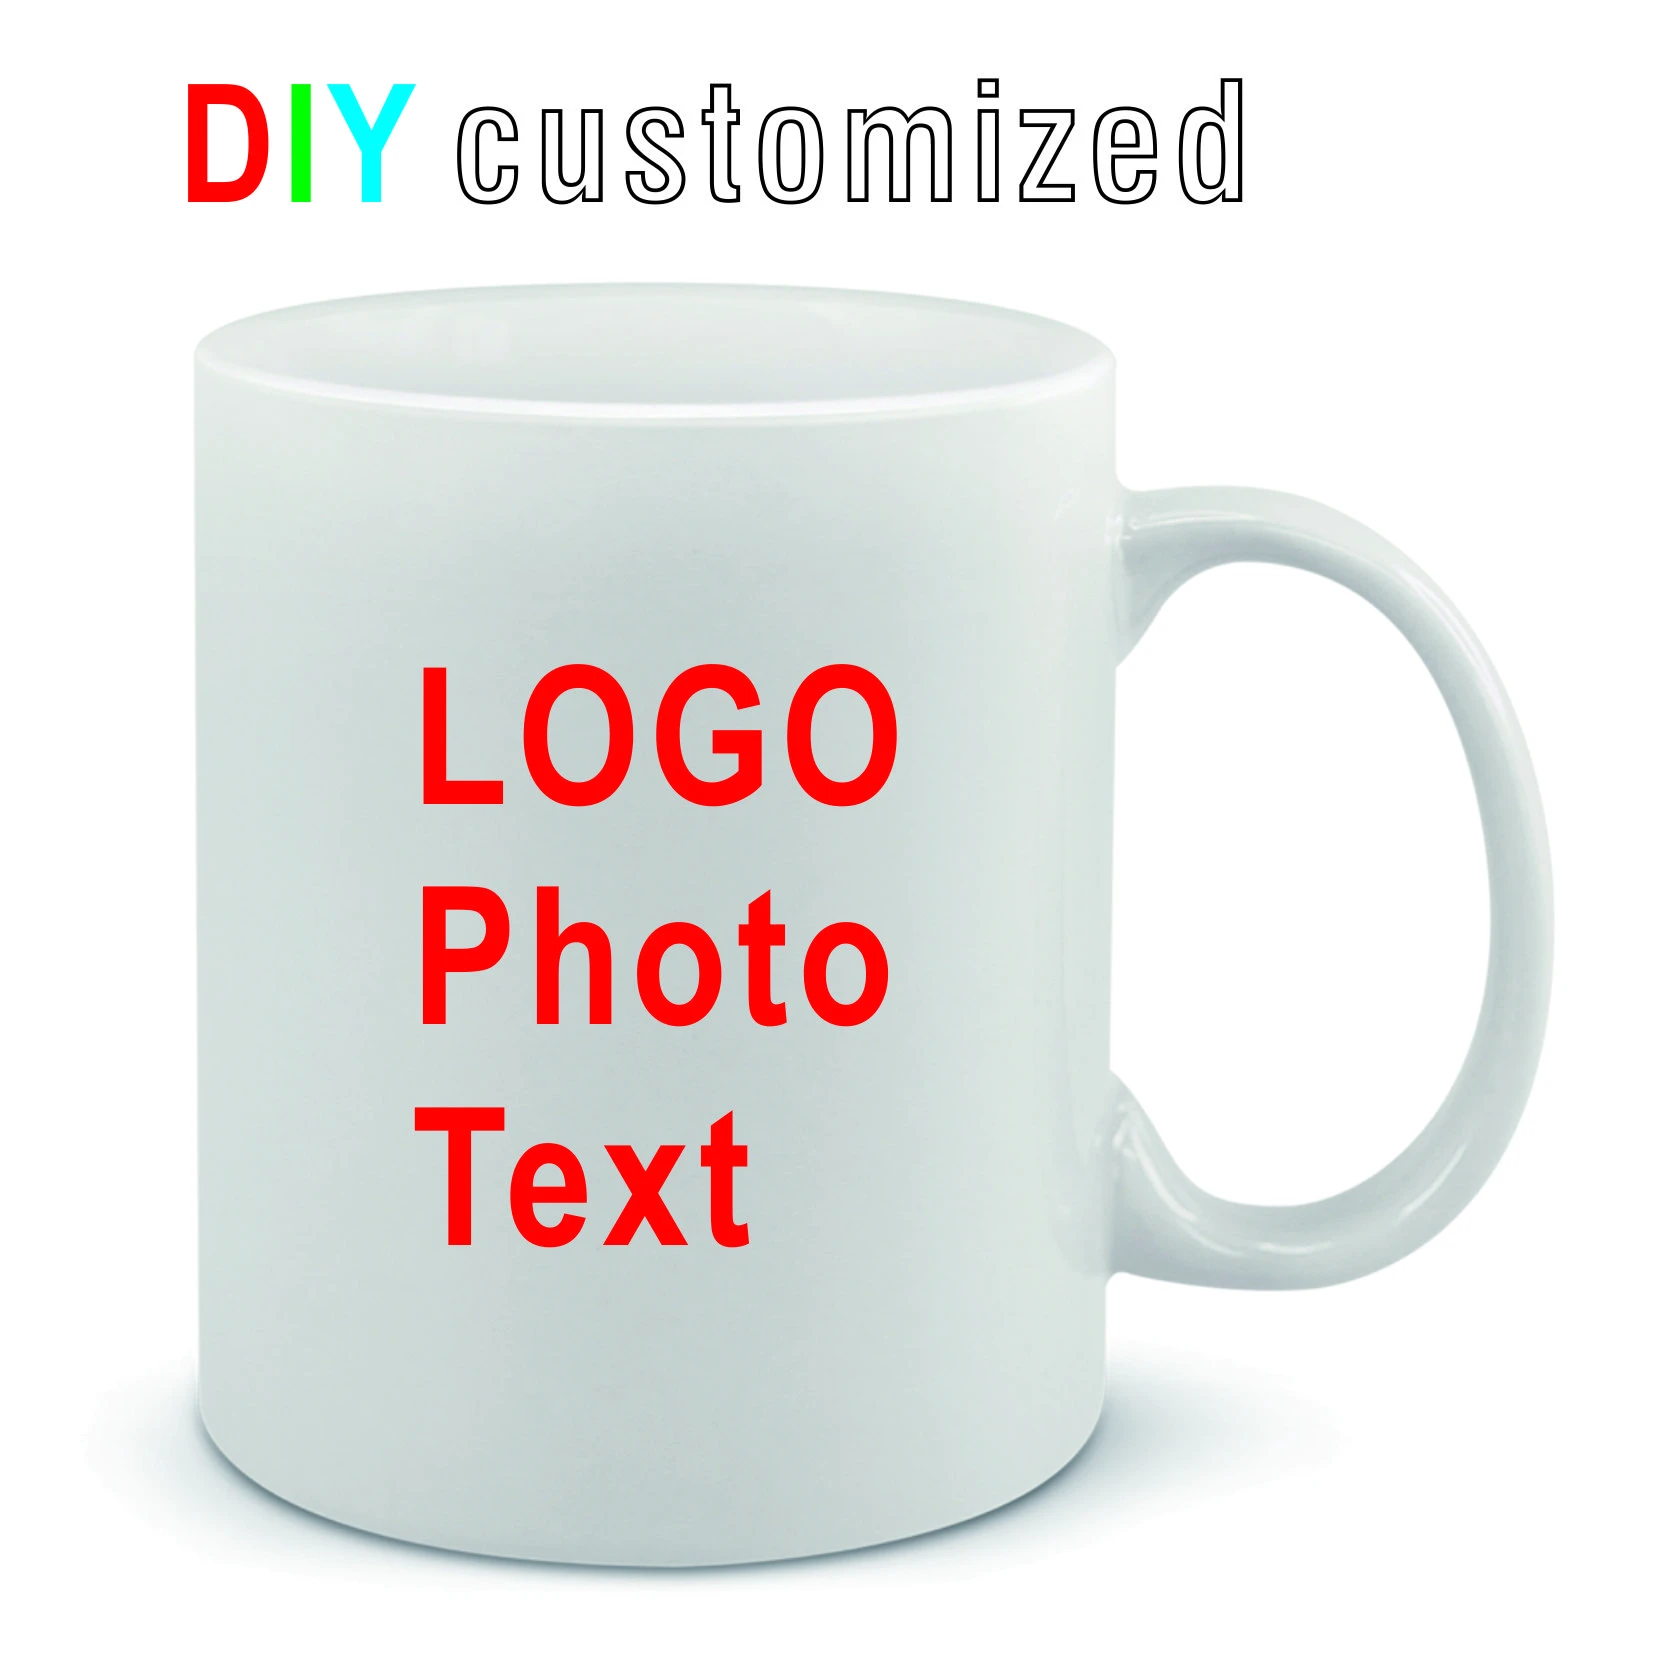 DIY Customized 350ML 12oz Ceramic Mug Personalized Mugs Coffee Milk Cup Creative Present Cute Gift Print Picture Photo LOGO Text